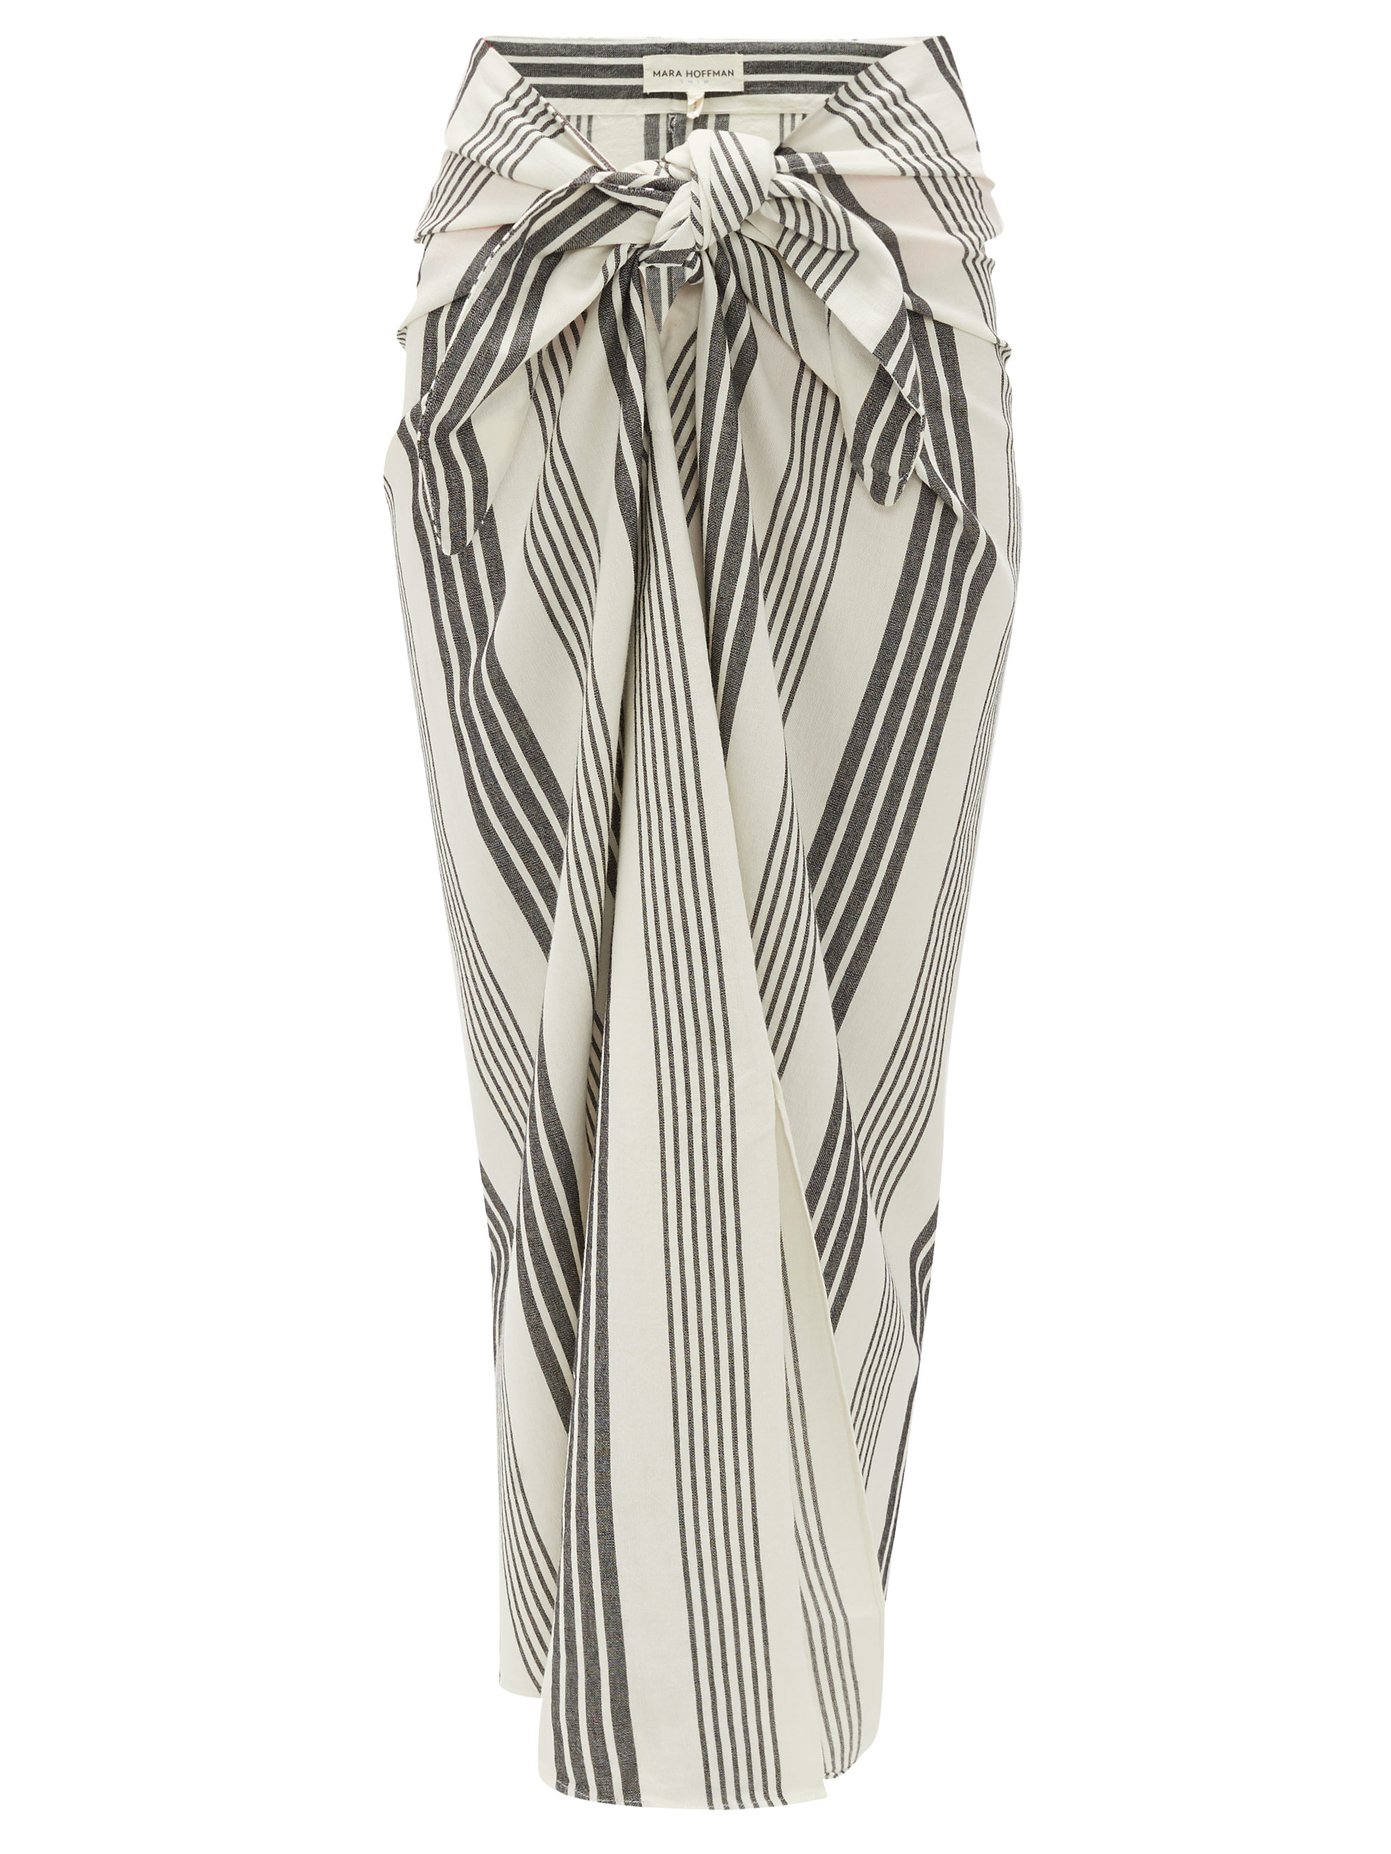 Izzi Tie Front Striped Canvas Skirt Mara Hoffman